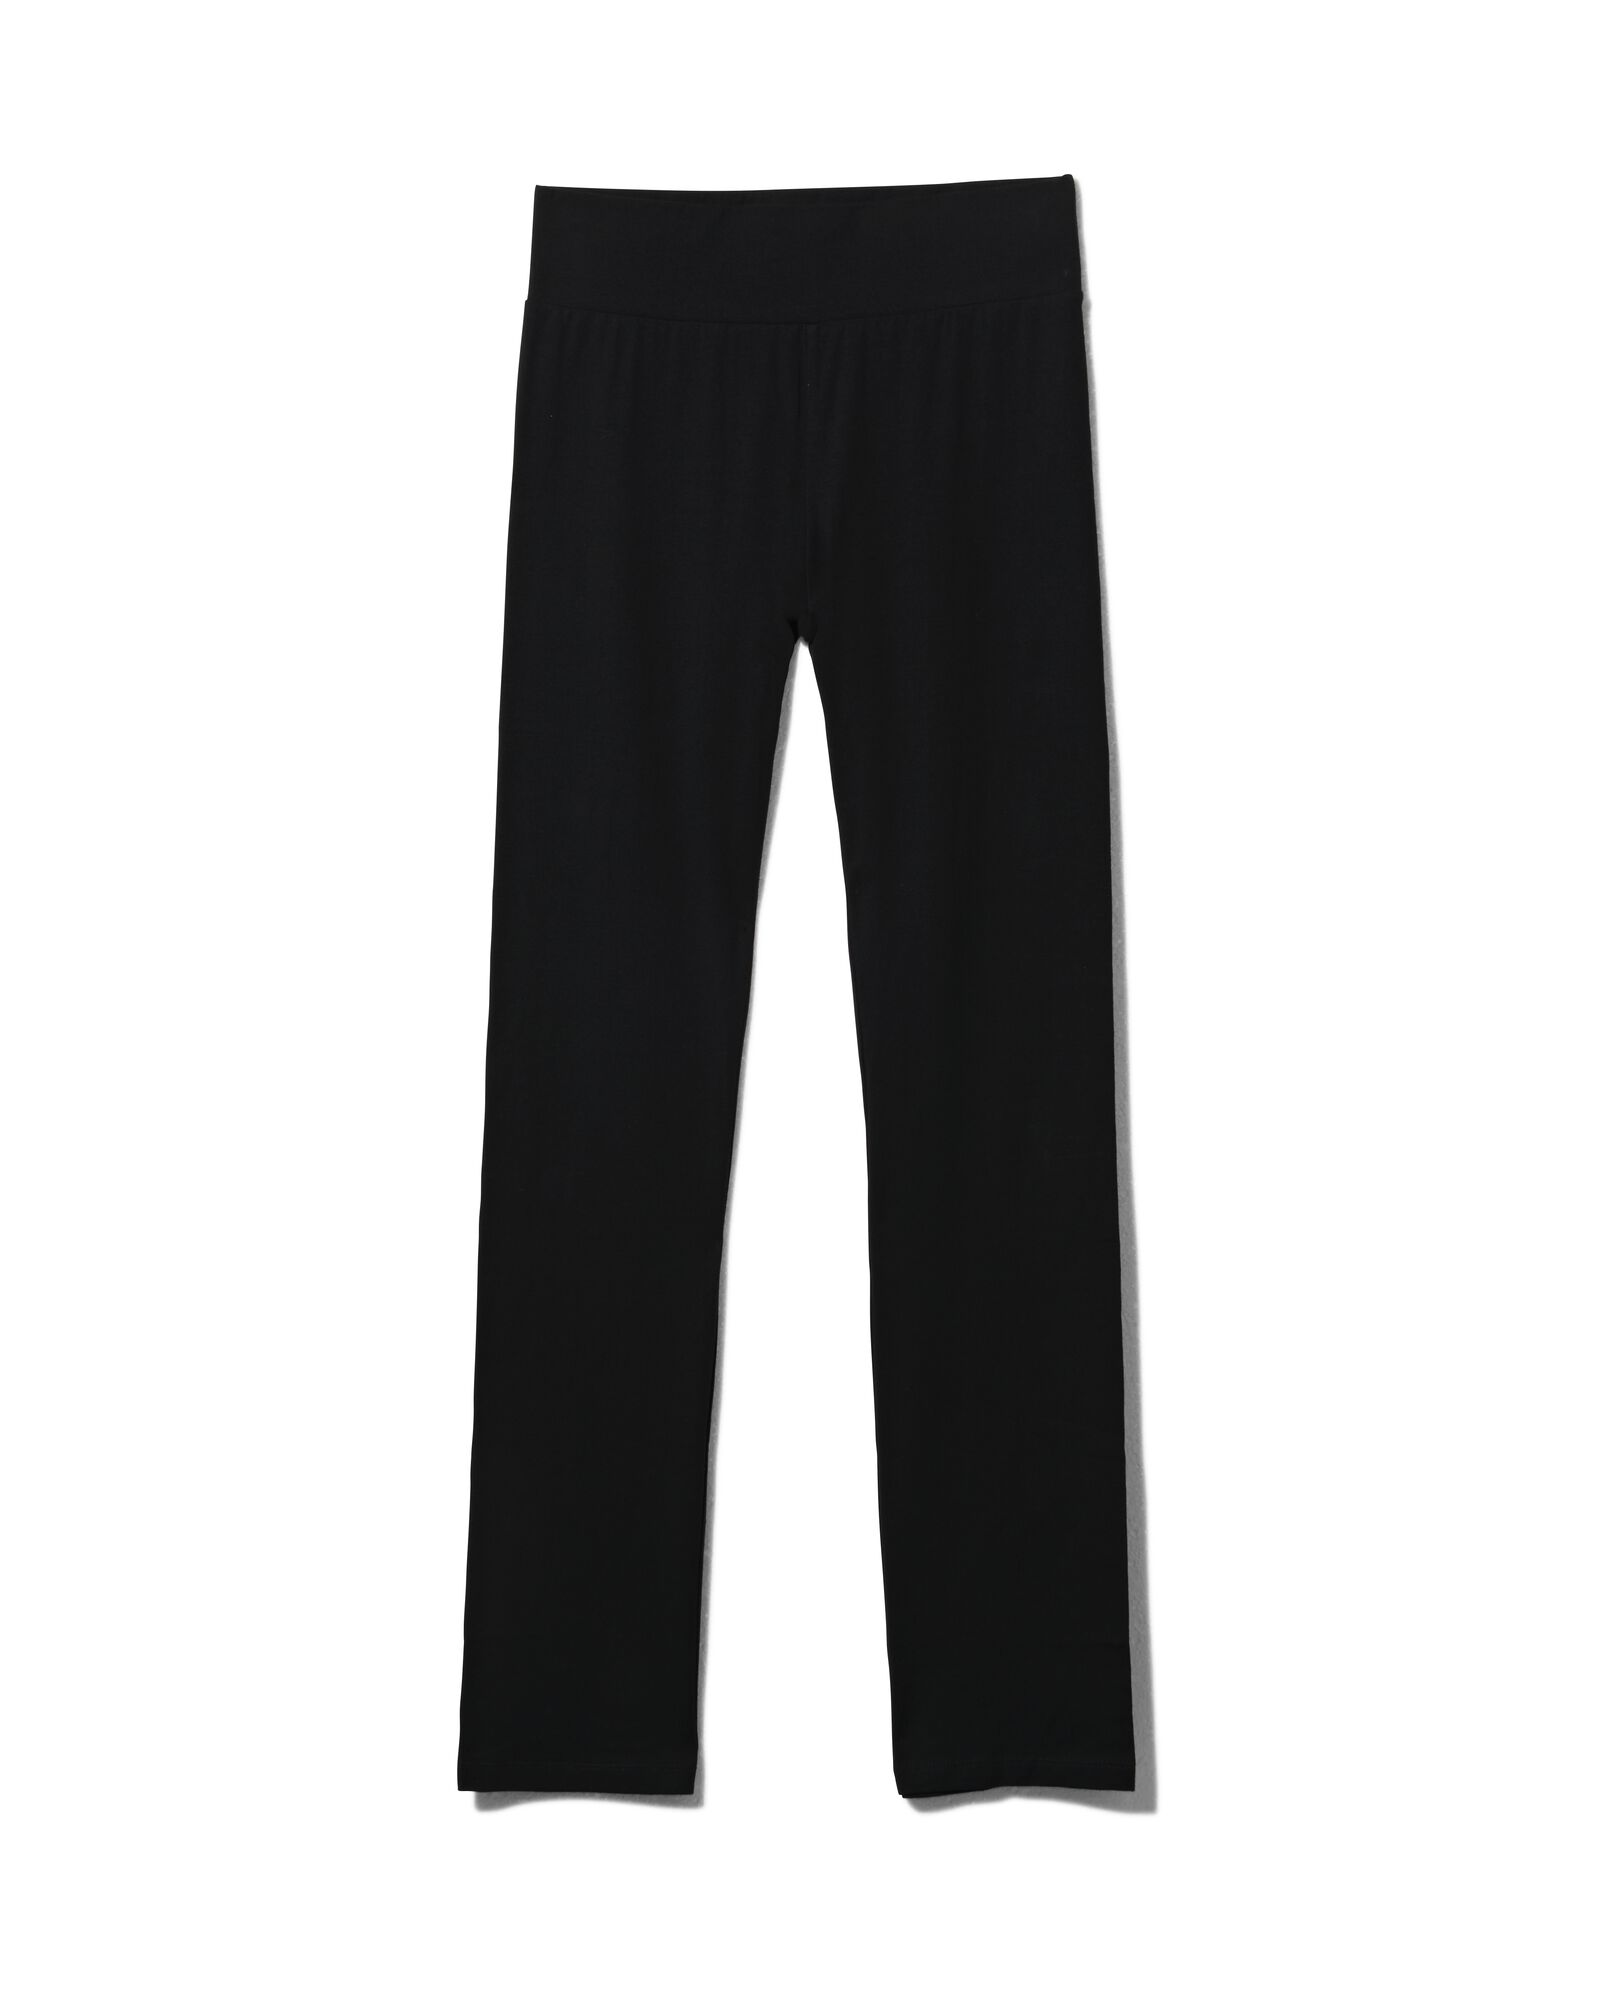 pantalon de yoga femme noir M - 36089302 - HEMA